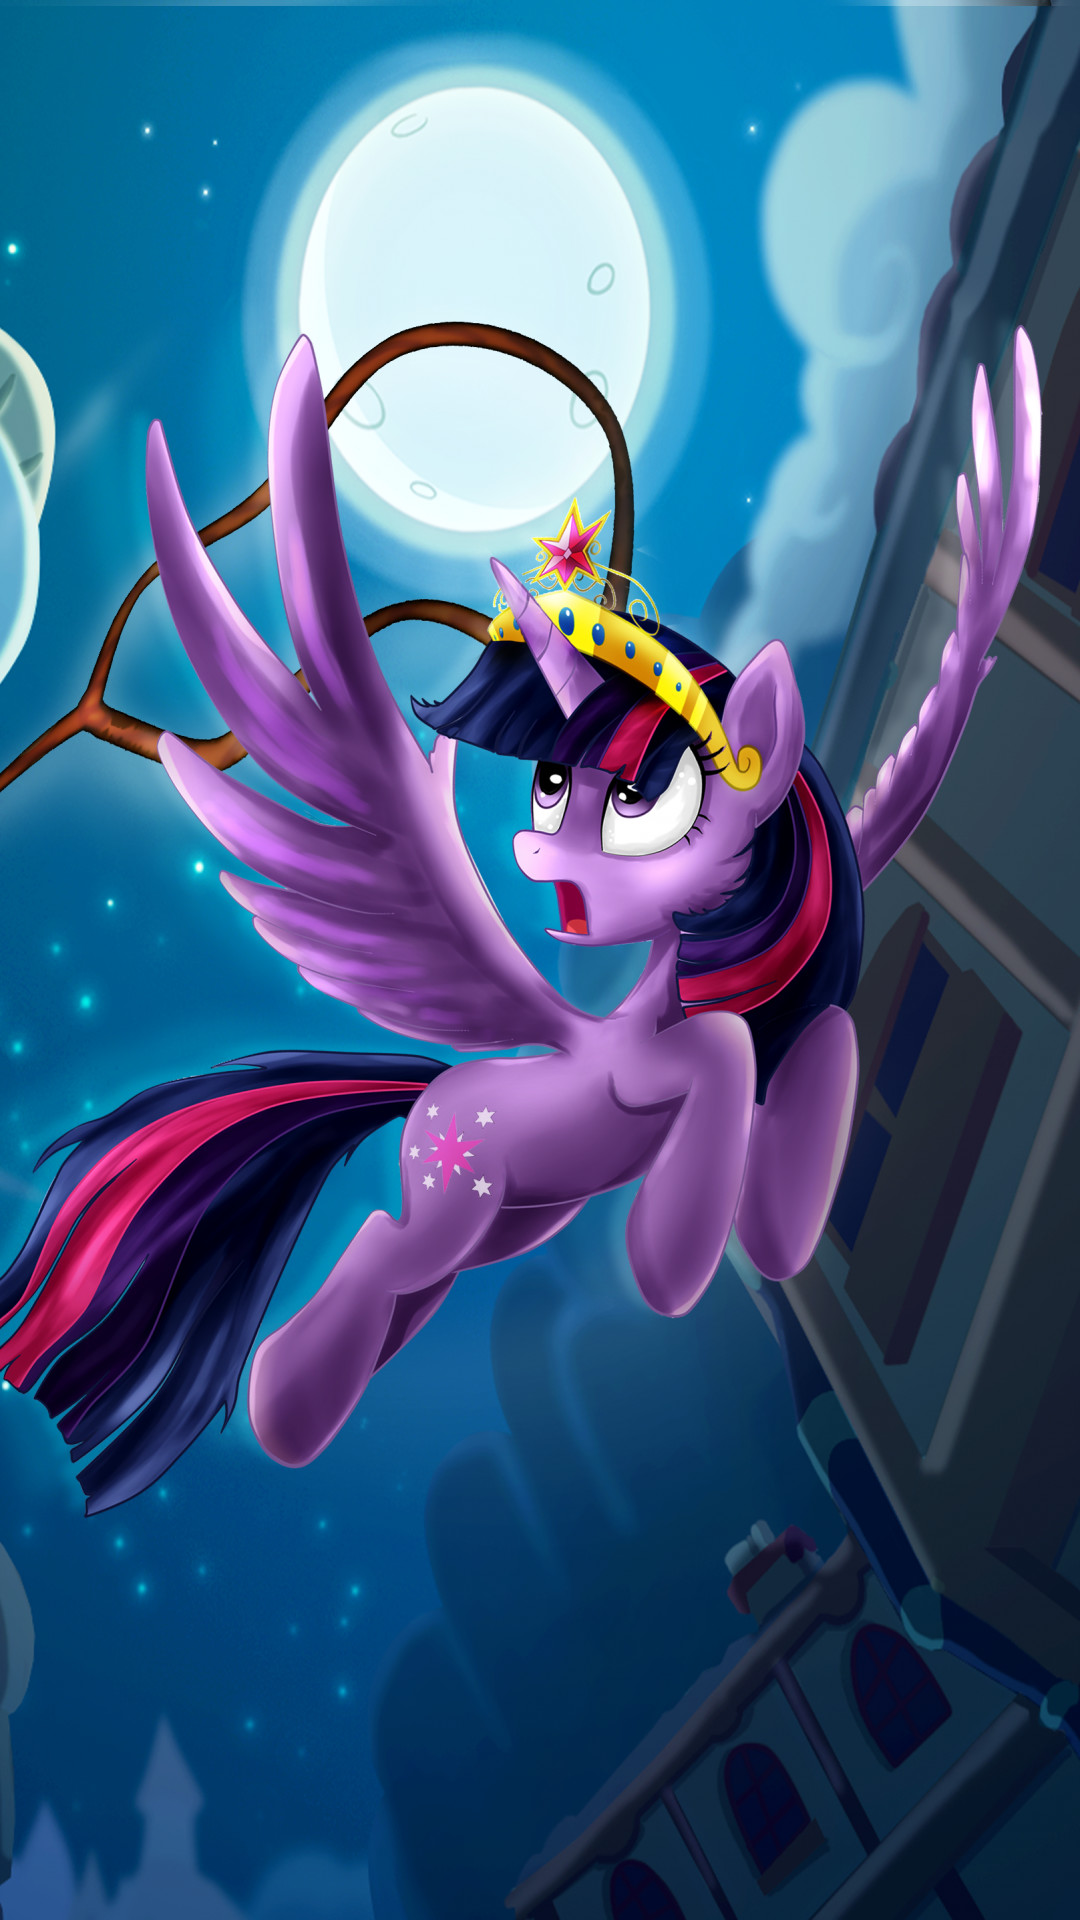 1080x1920 Cartoon My Little Pony: Friendship Is Magic Twilight Sparkle. Wallpaper  298736